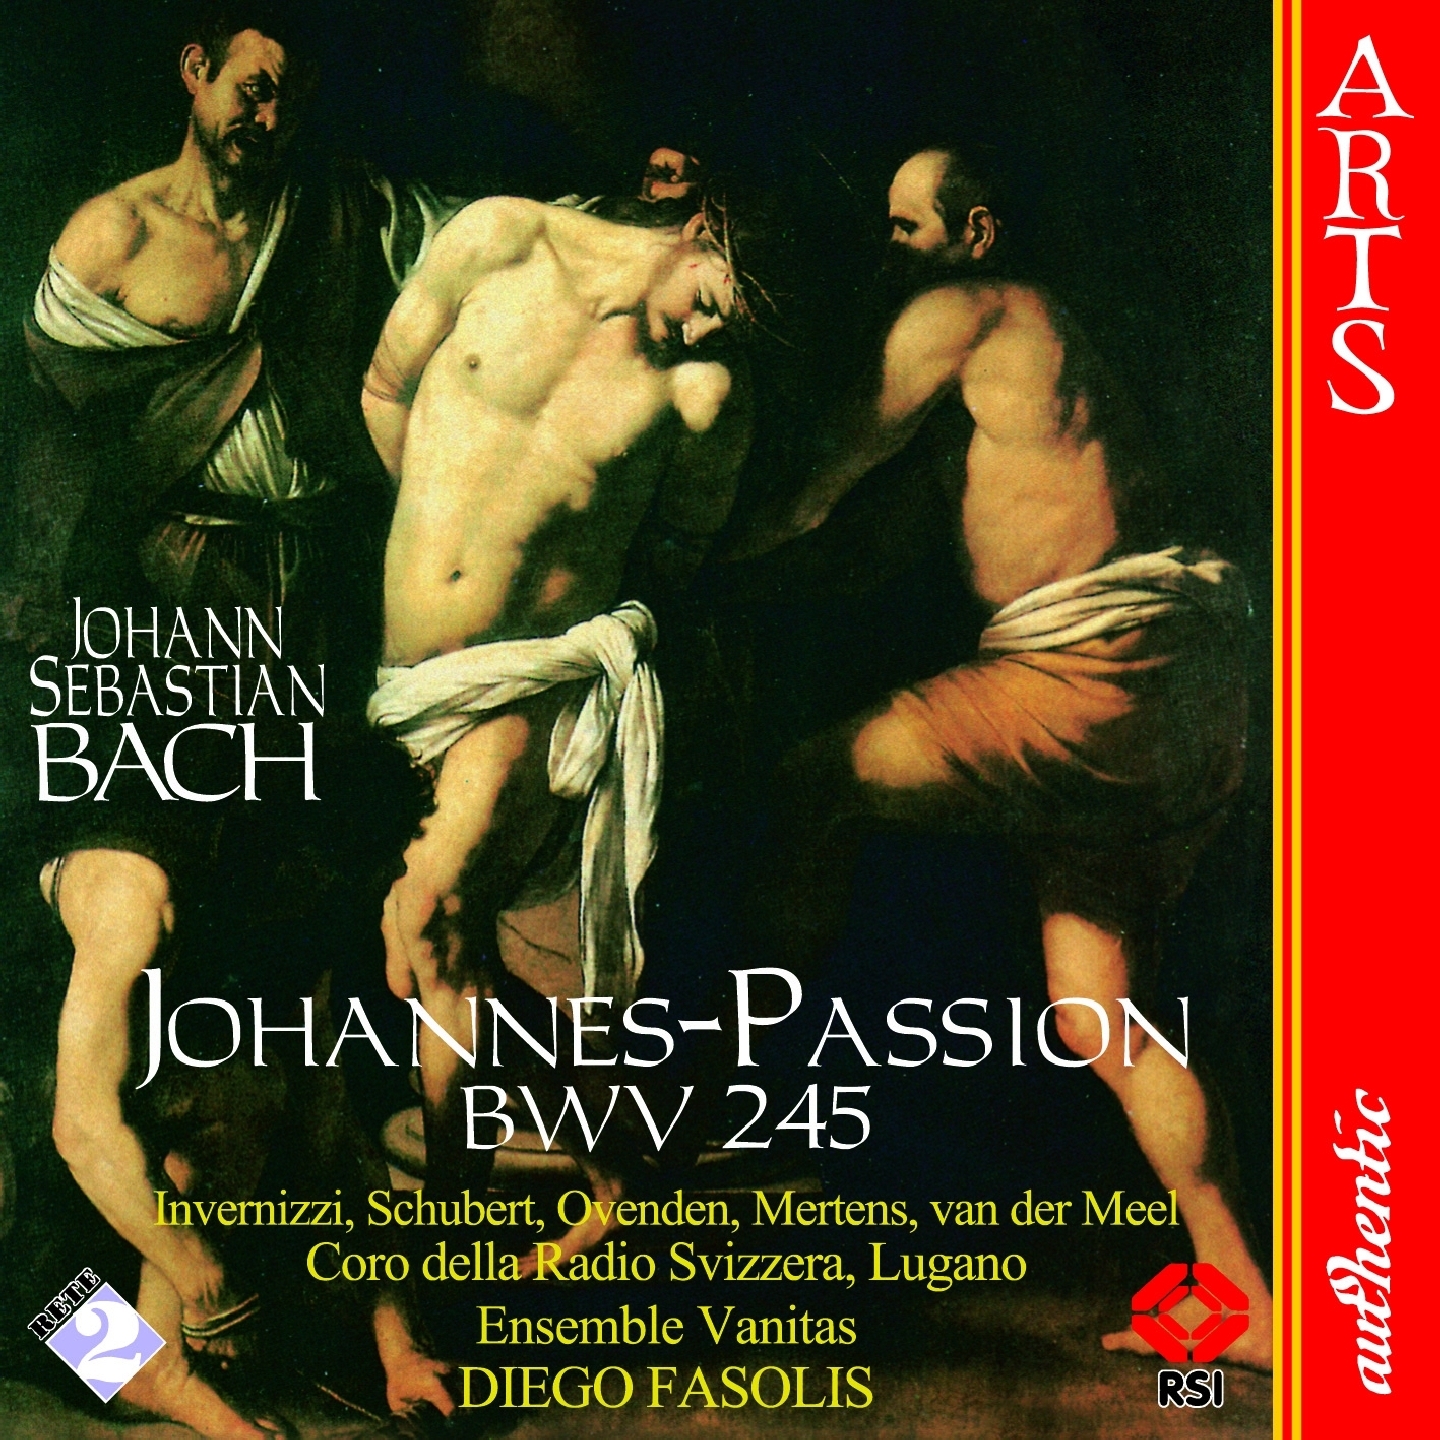 Johannes-Passion, BWV 245, Part II: 35. Aria "Zerfliesse, mein Herze" (Soprano)